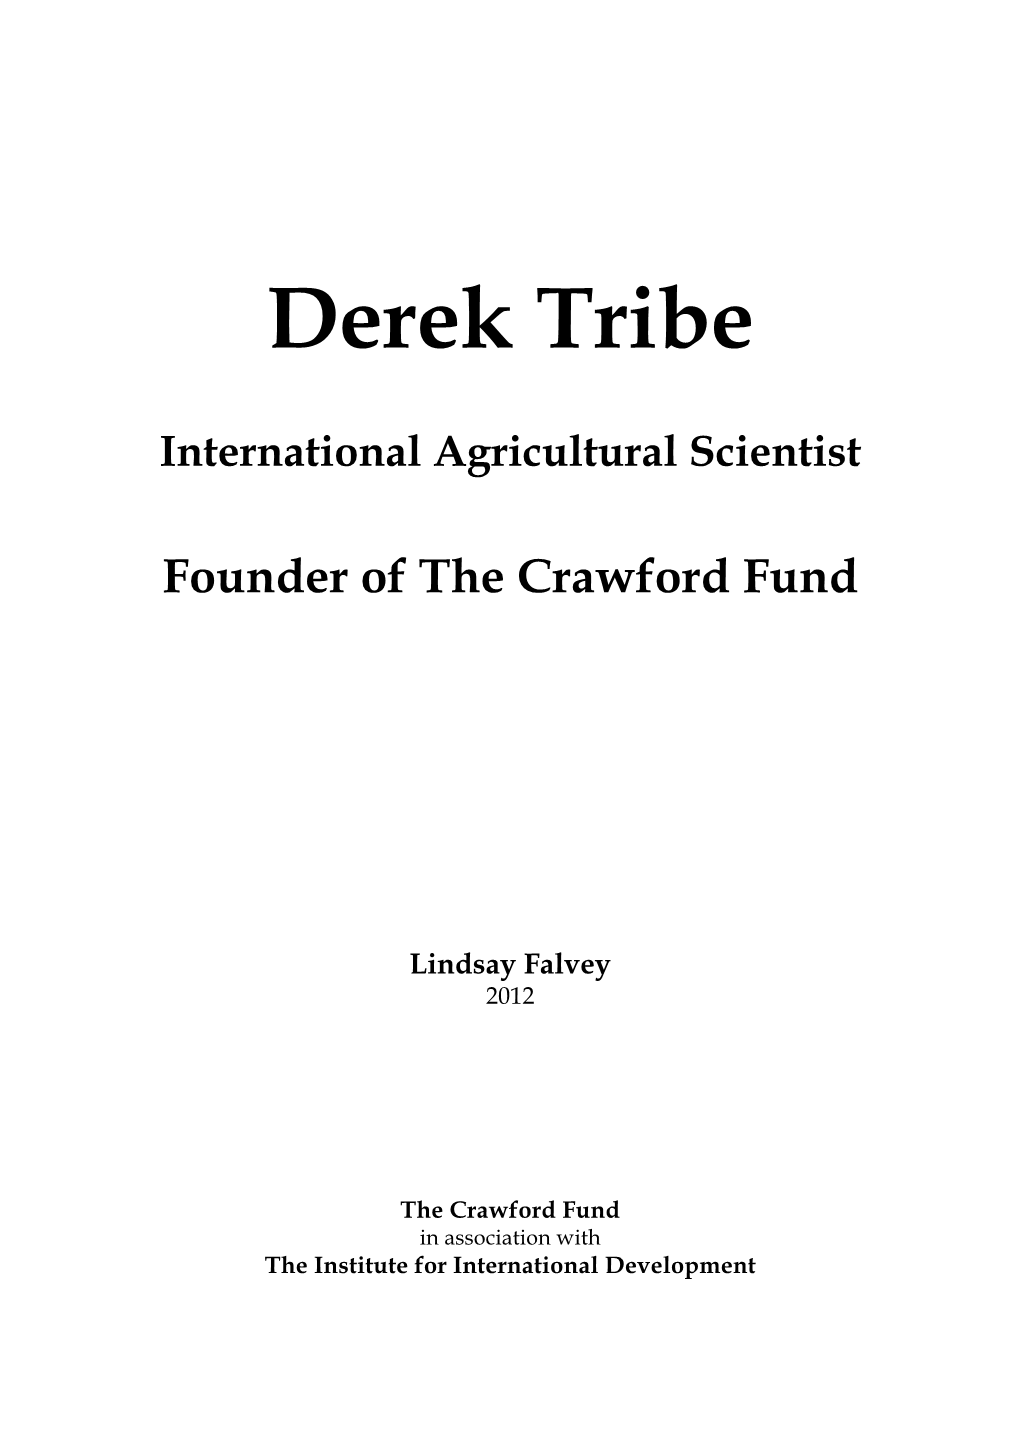 Derek Tribe Biography